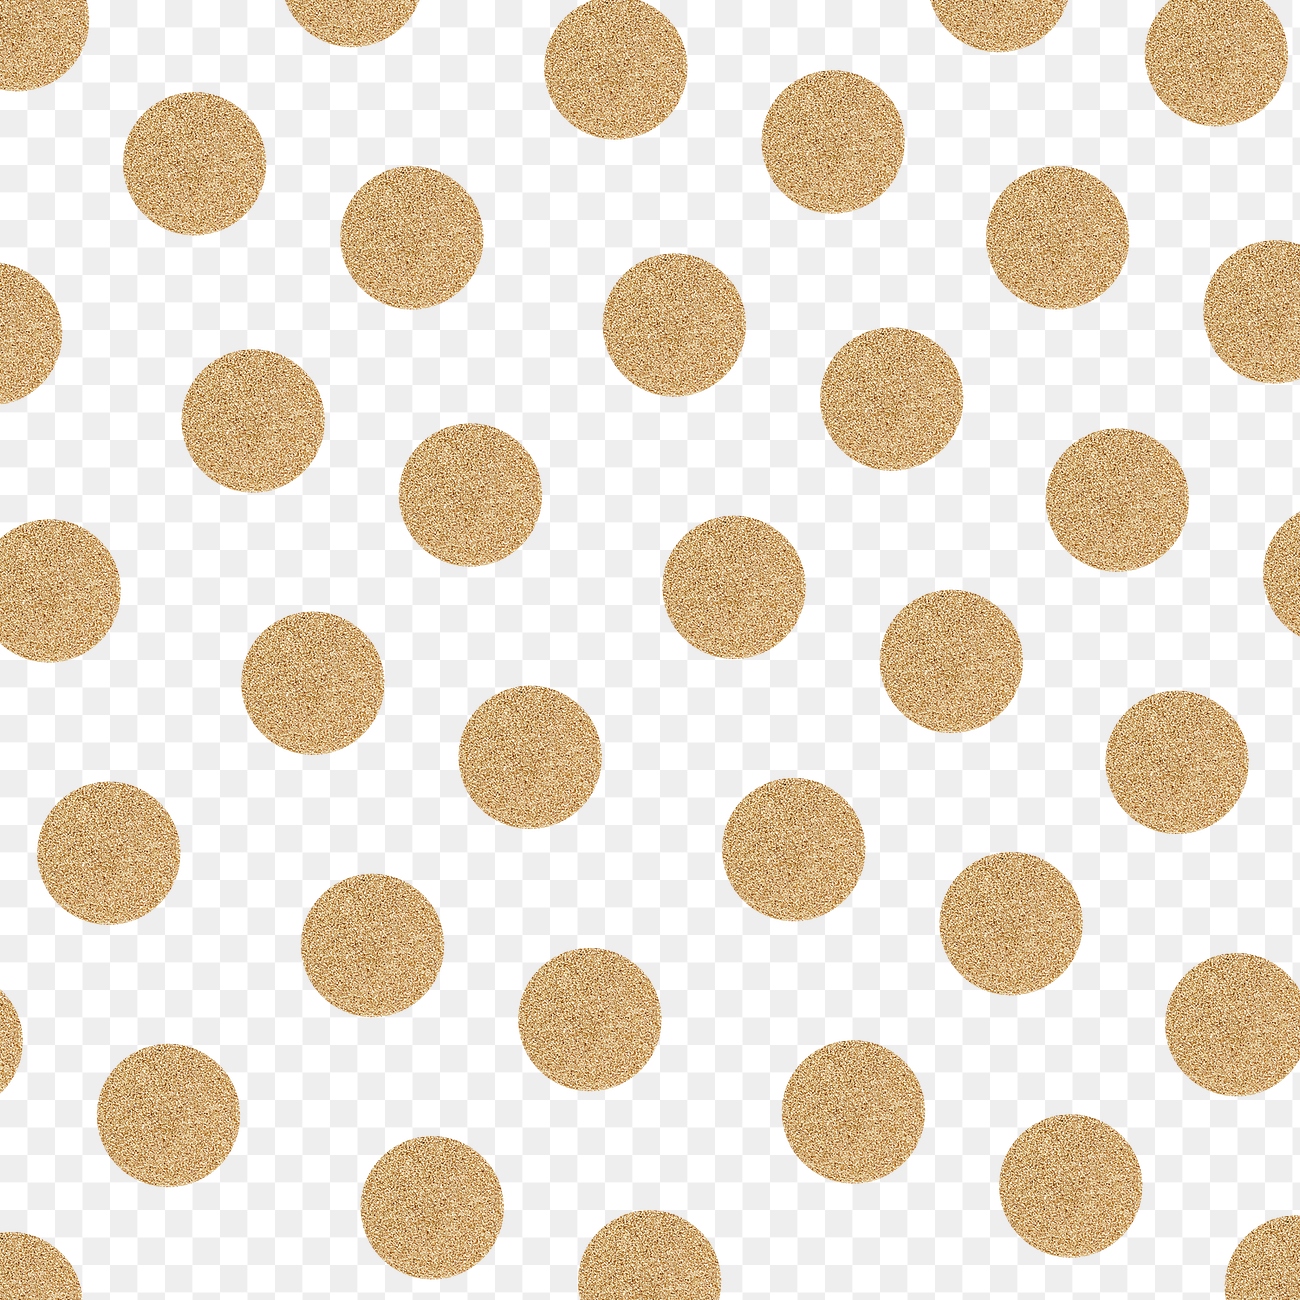 Golden shimmery png polka dot | Premium PNG - rawpixel